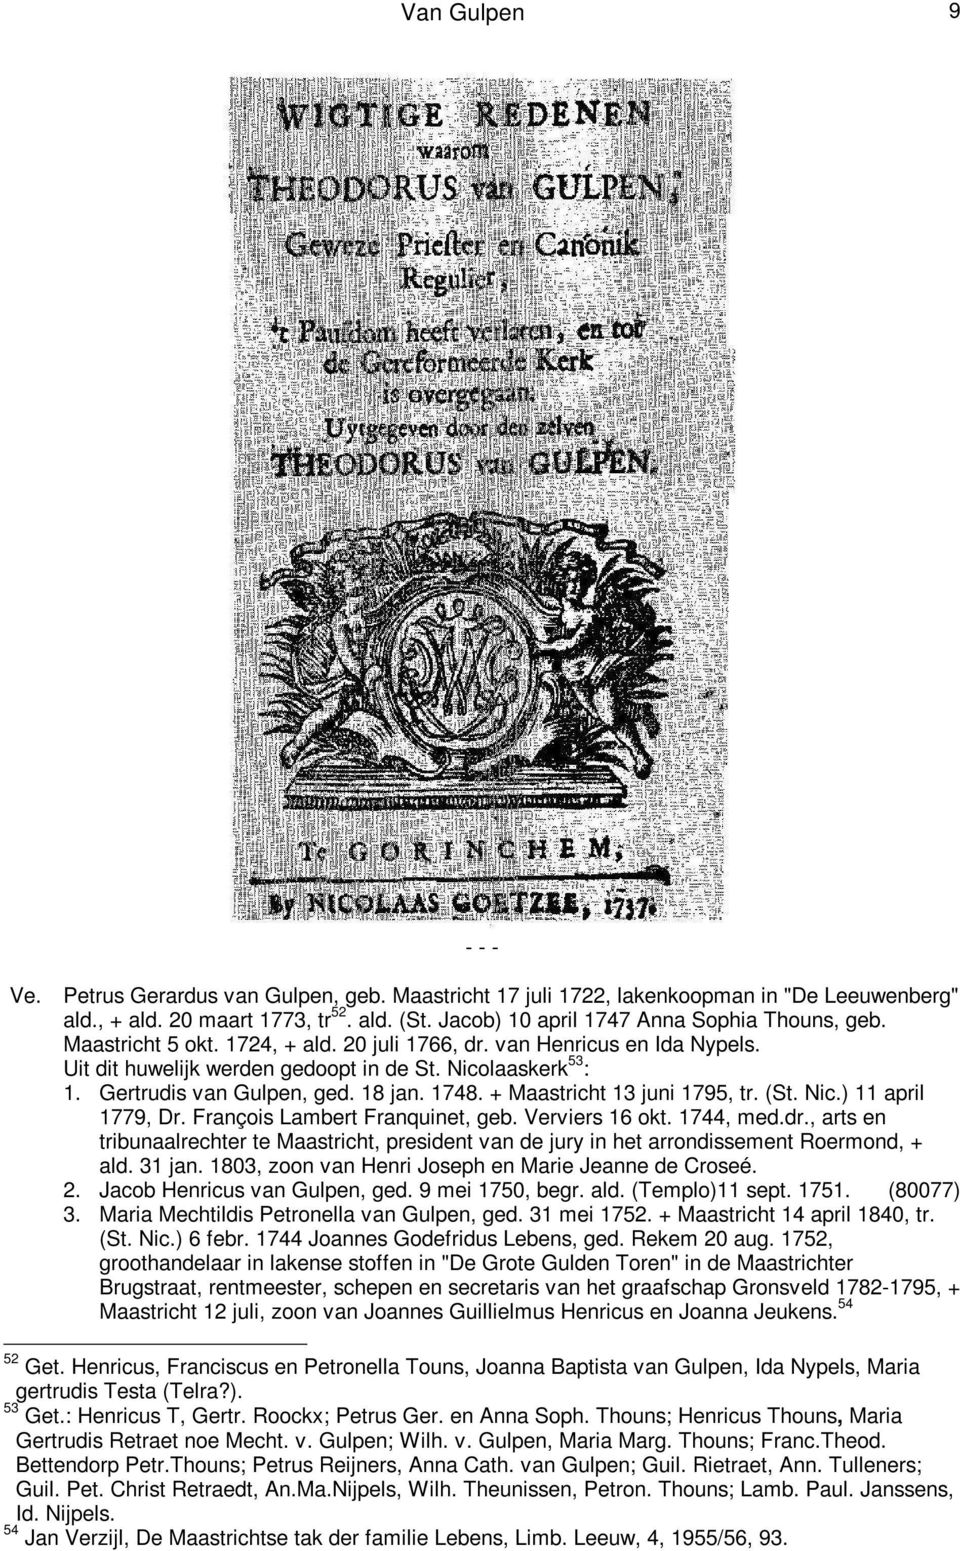 Gertrudis van Gulpen, ged. 18 jan. 1748. + Maastricht 13 juni 1795, tr. (St. Nic.) 11 april 1779, Dr. François Lambert Franquinet, geb. Verviers 16 okt. 1744, med.dr.